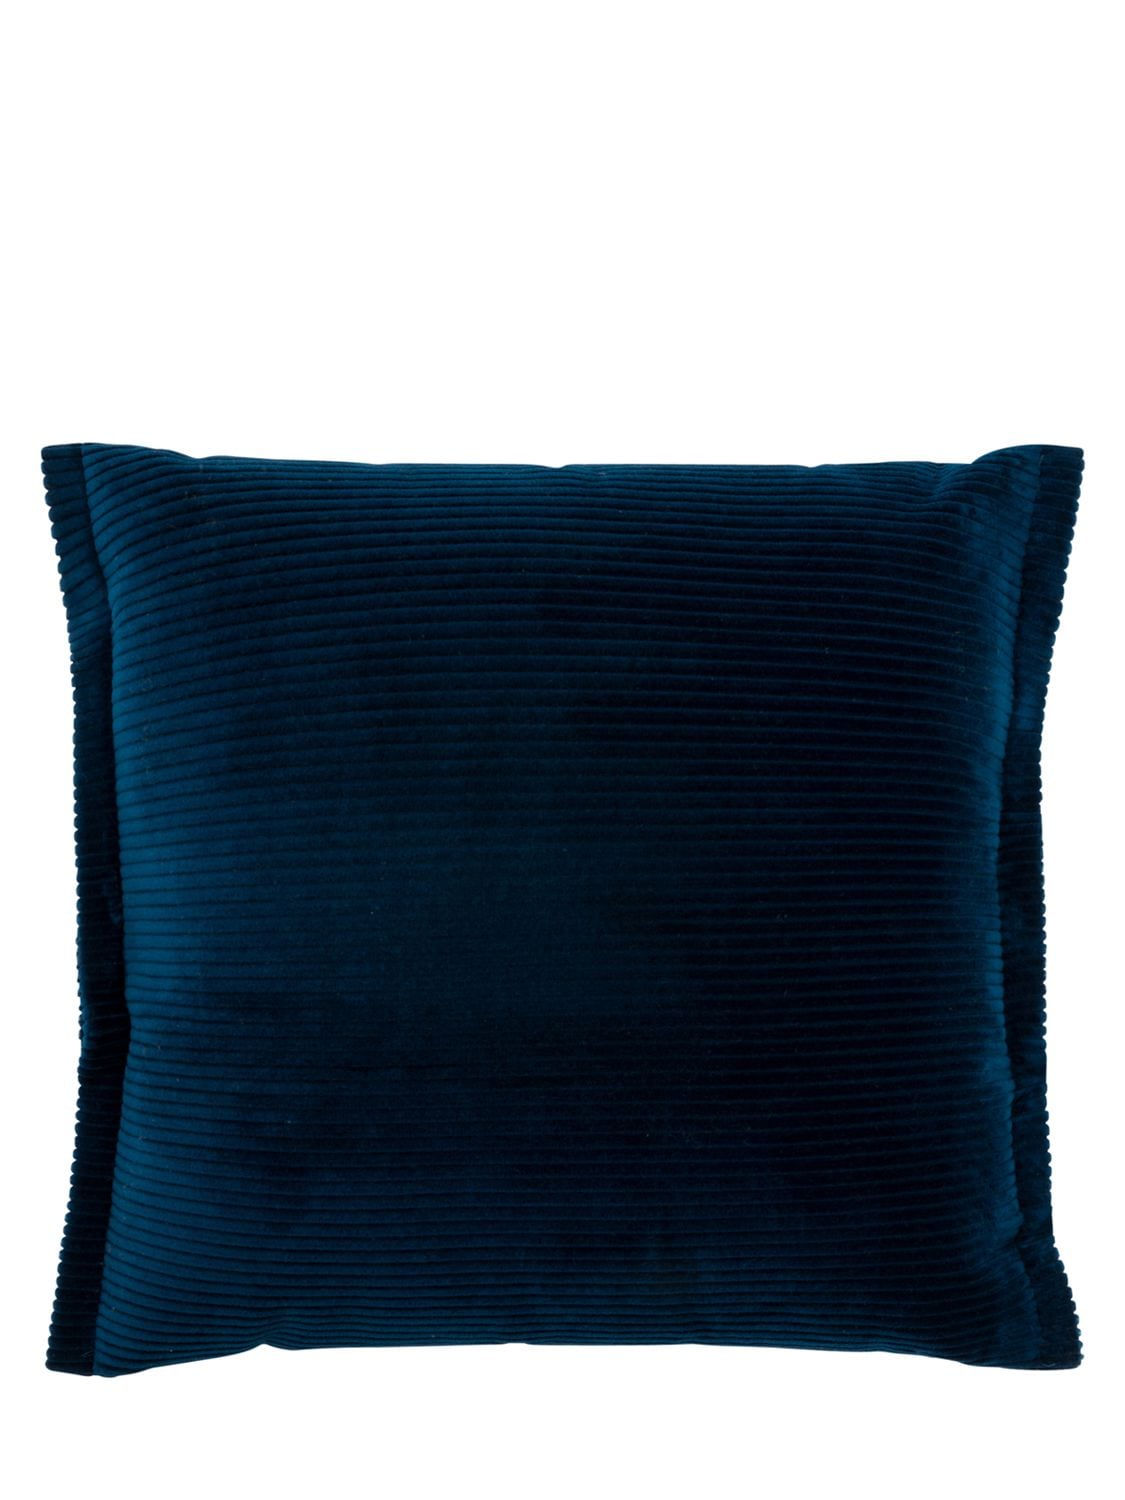 Lanerossi Dueville Cotton Cushion In Blue